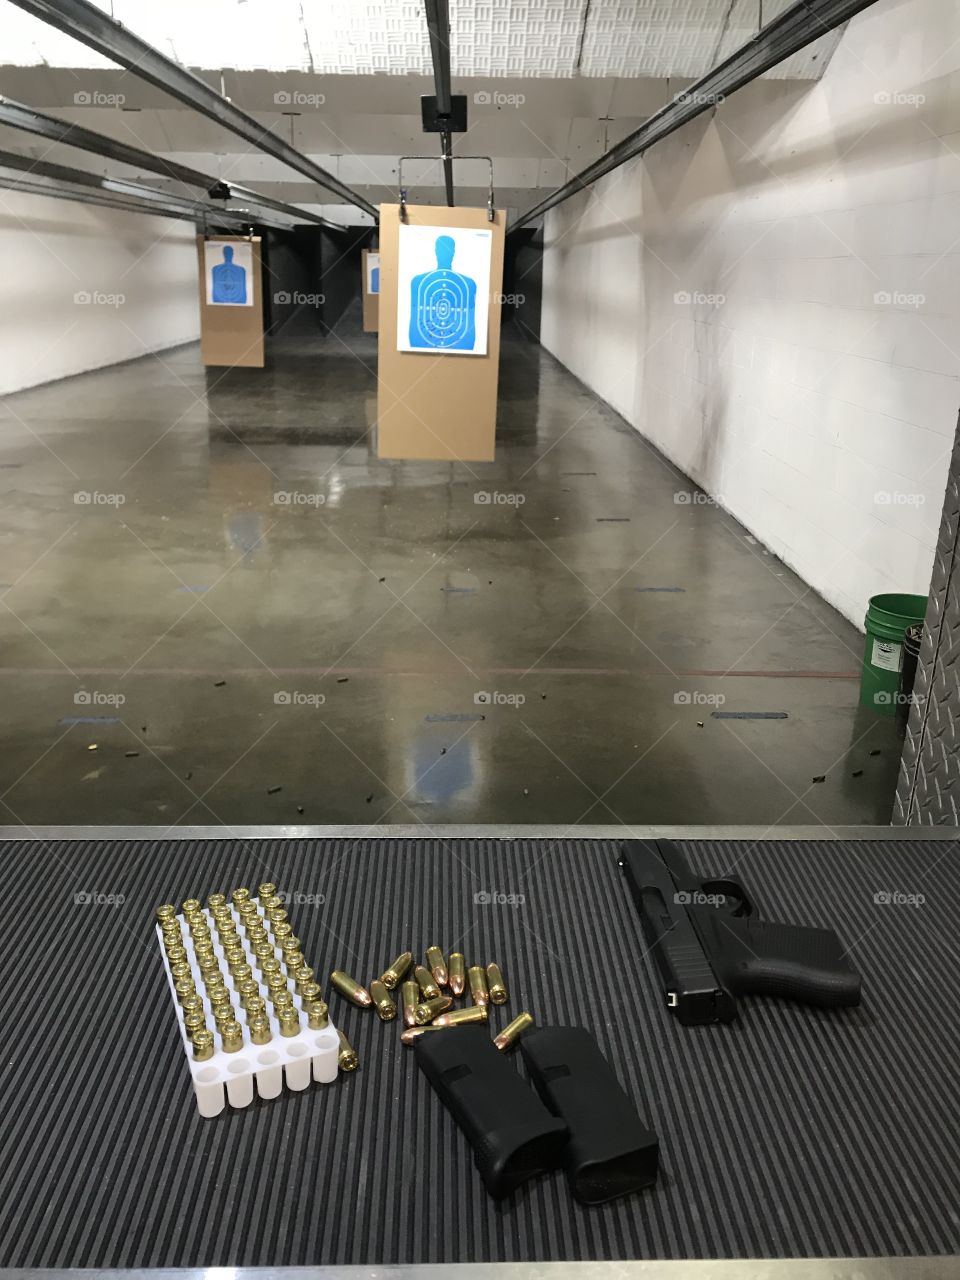 Ammo magazine gun range